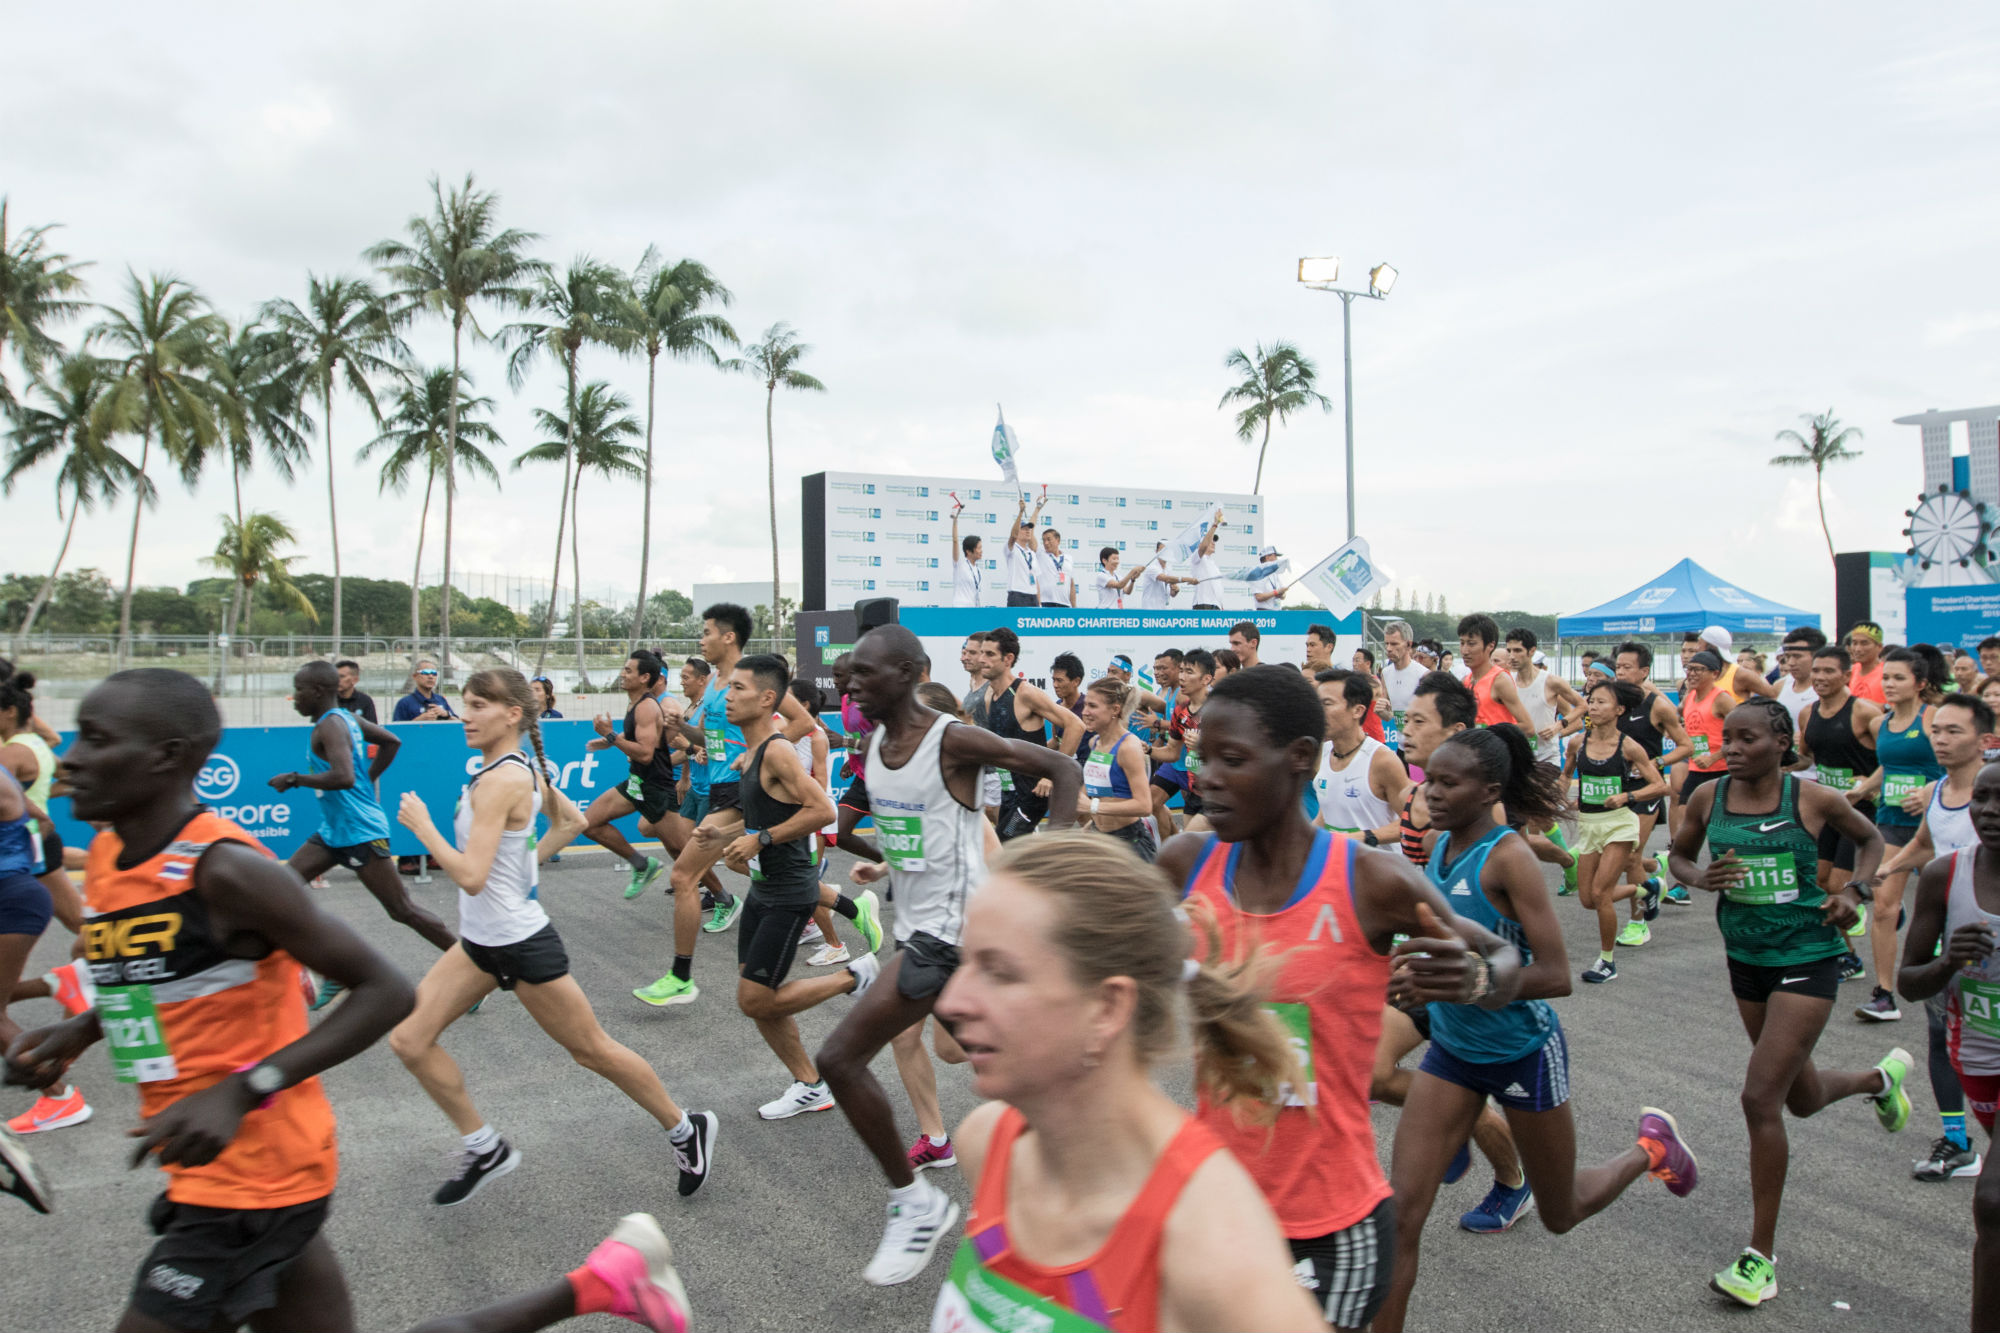 Runners at this year’s marathon. Photo: Standard Chartered Singapore